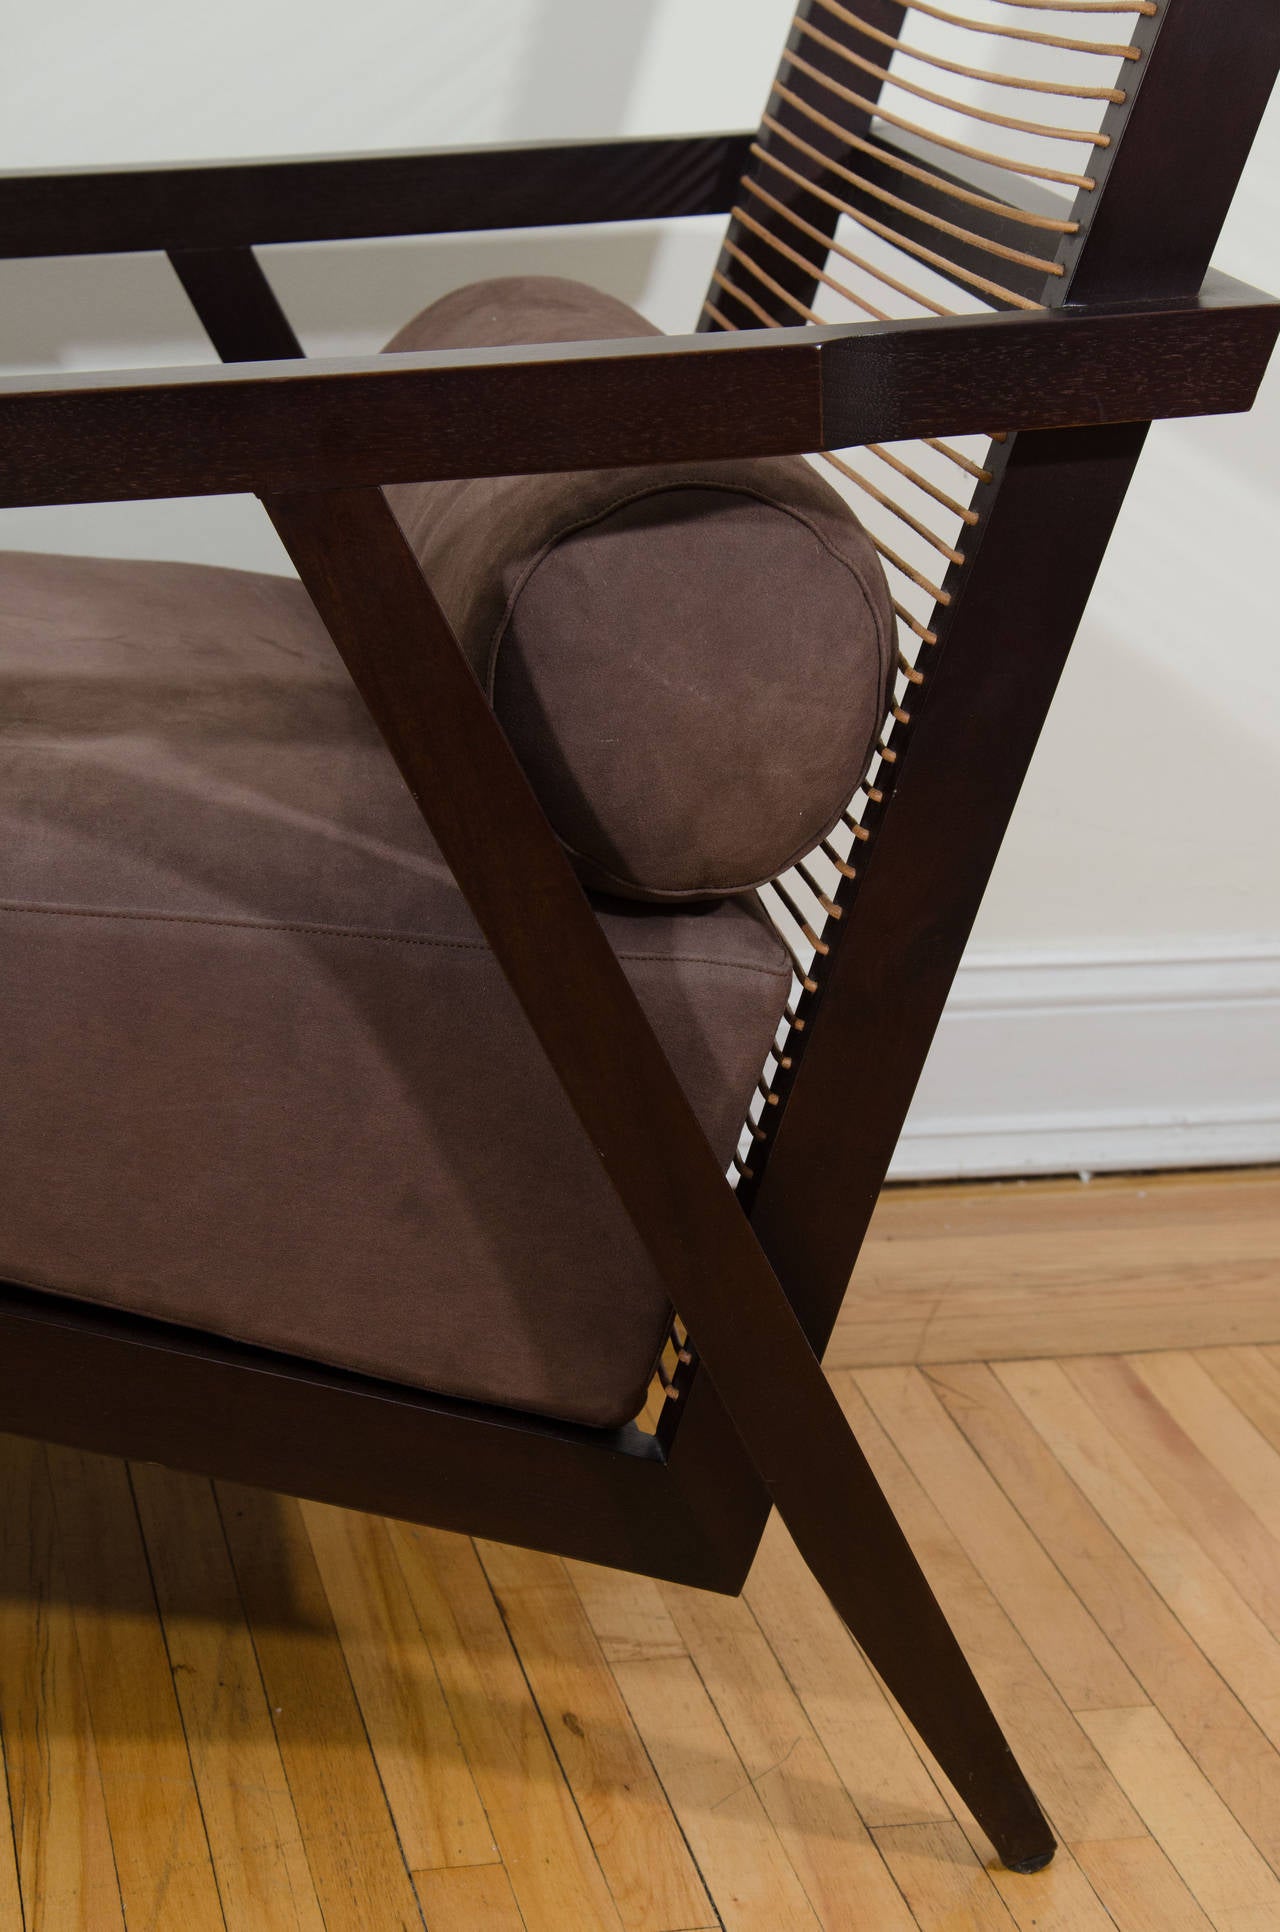 Leather Pierantonio Bonacina Astoria High Back Lounge Chair